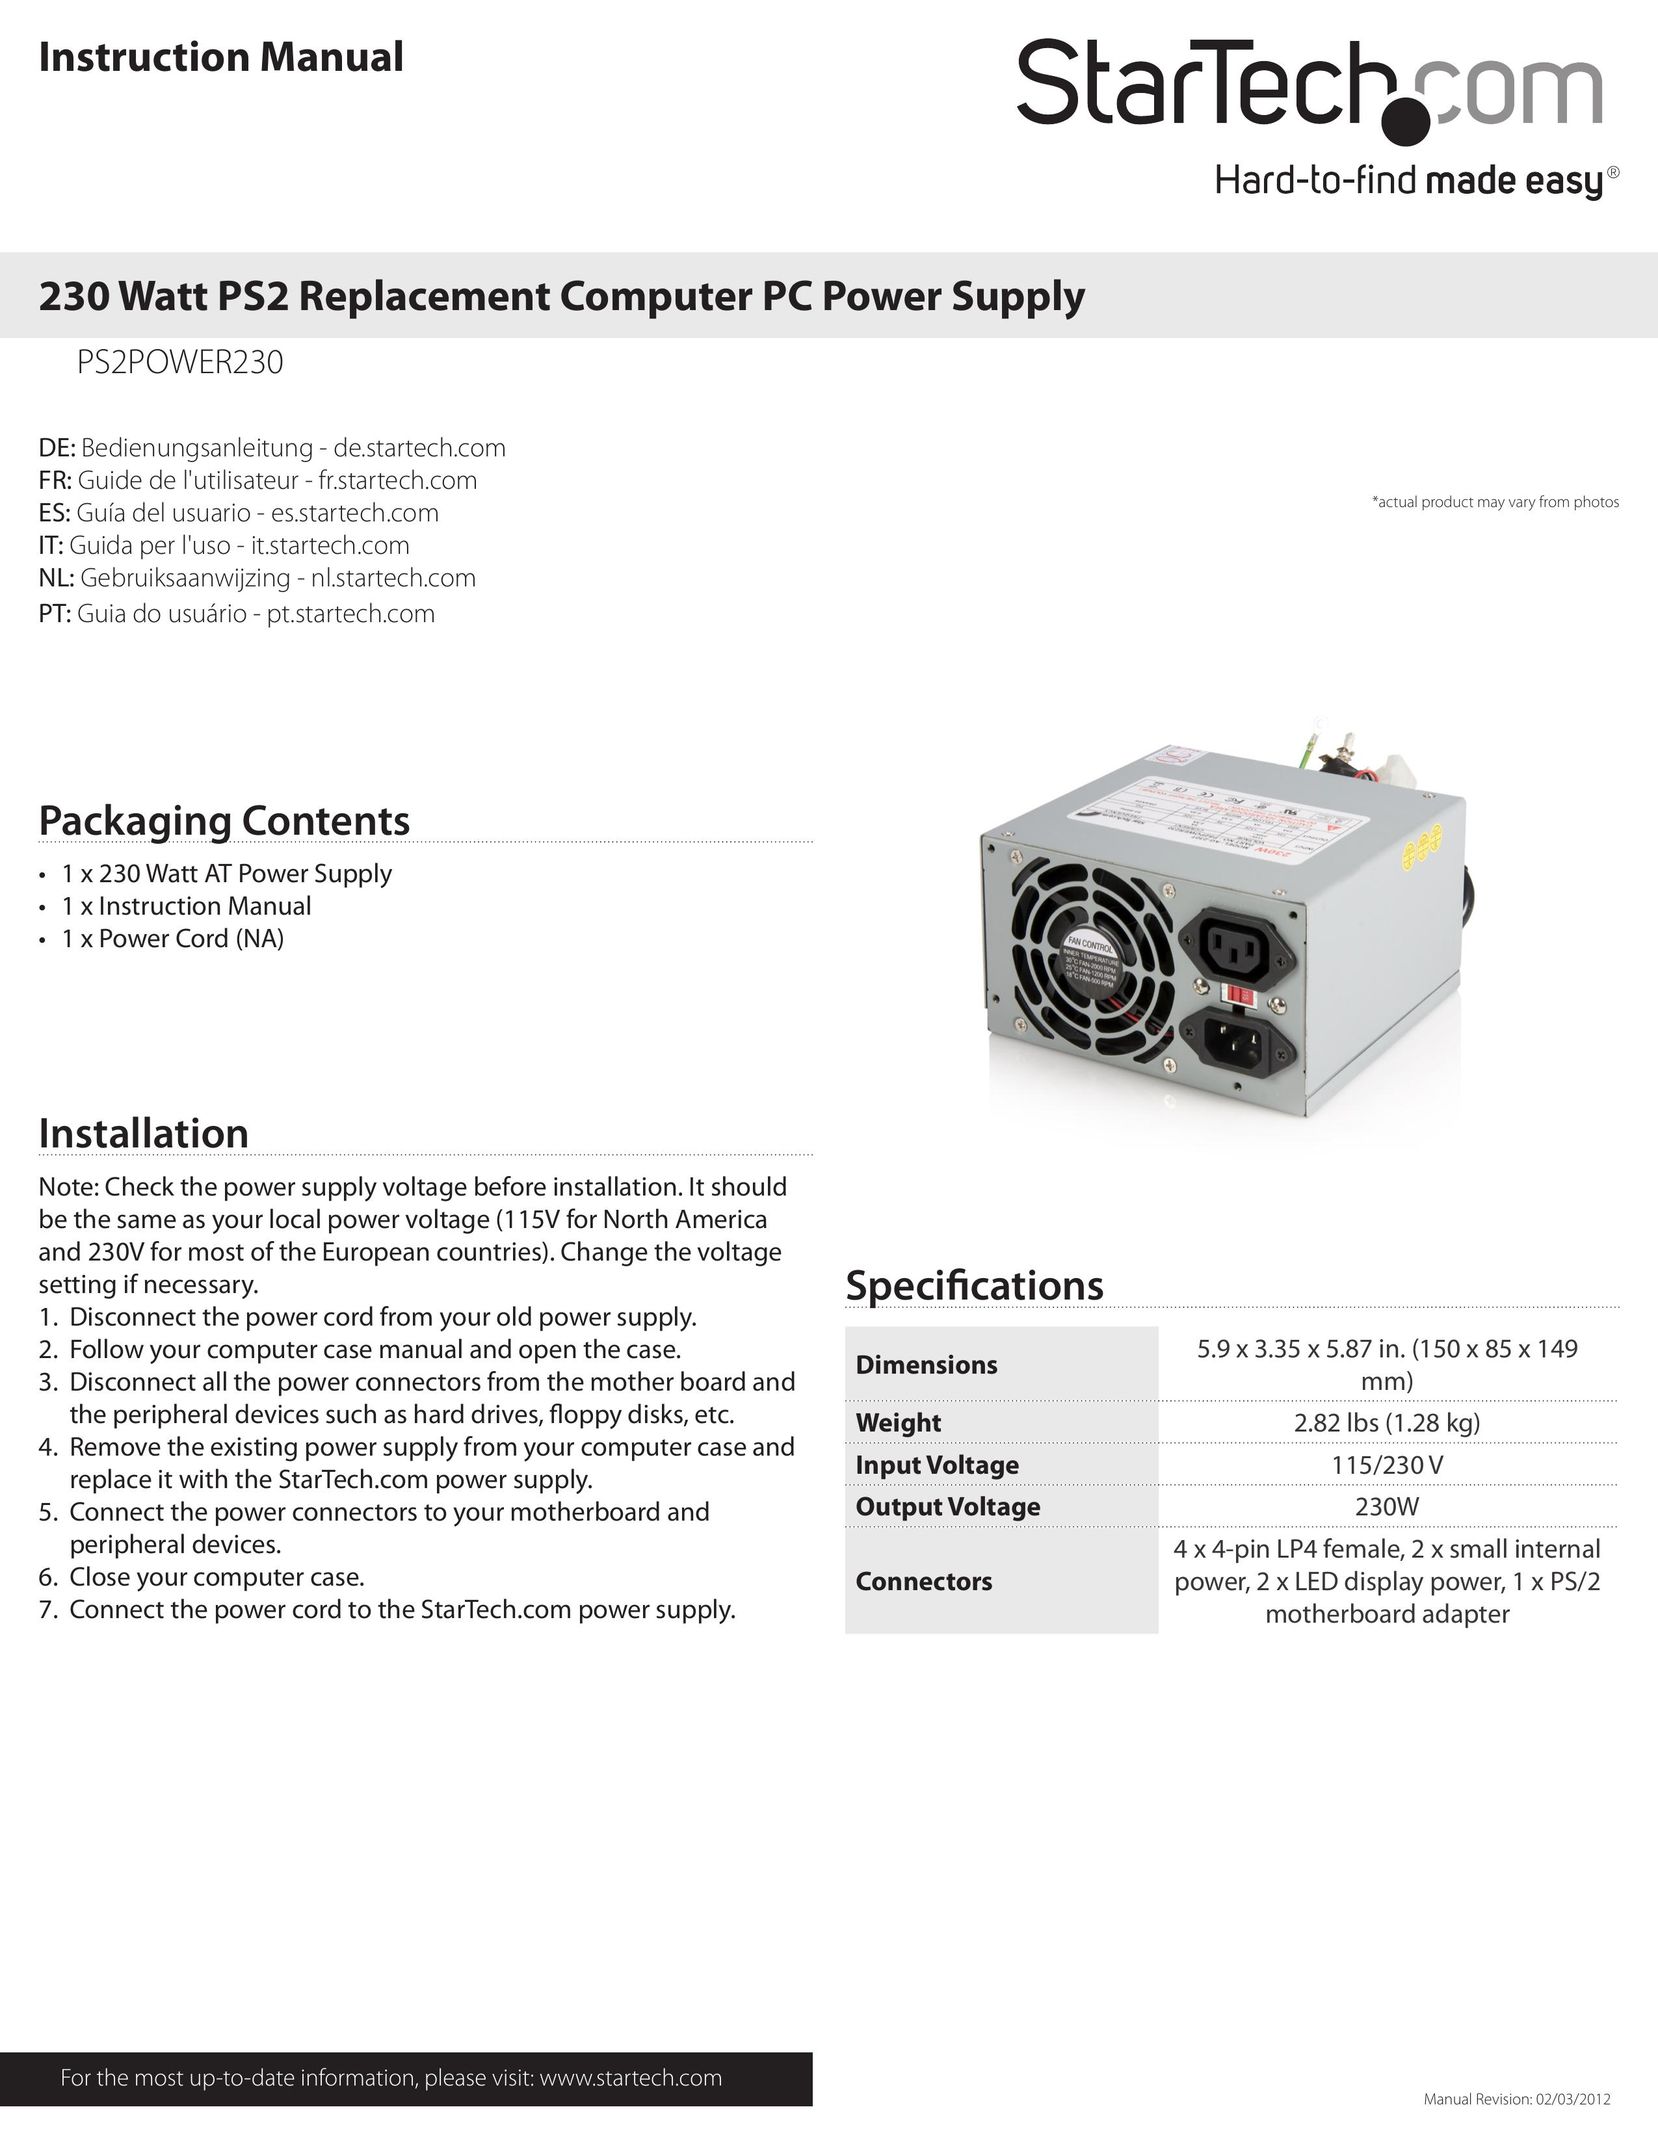 StarTech.com PS2POWER230 Power Supply User Manual